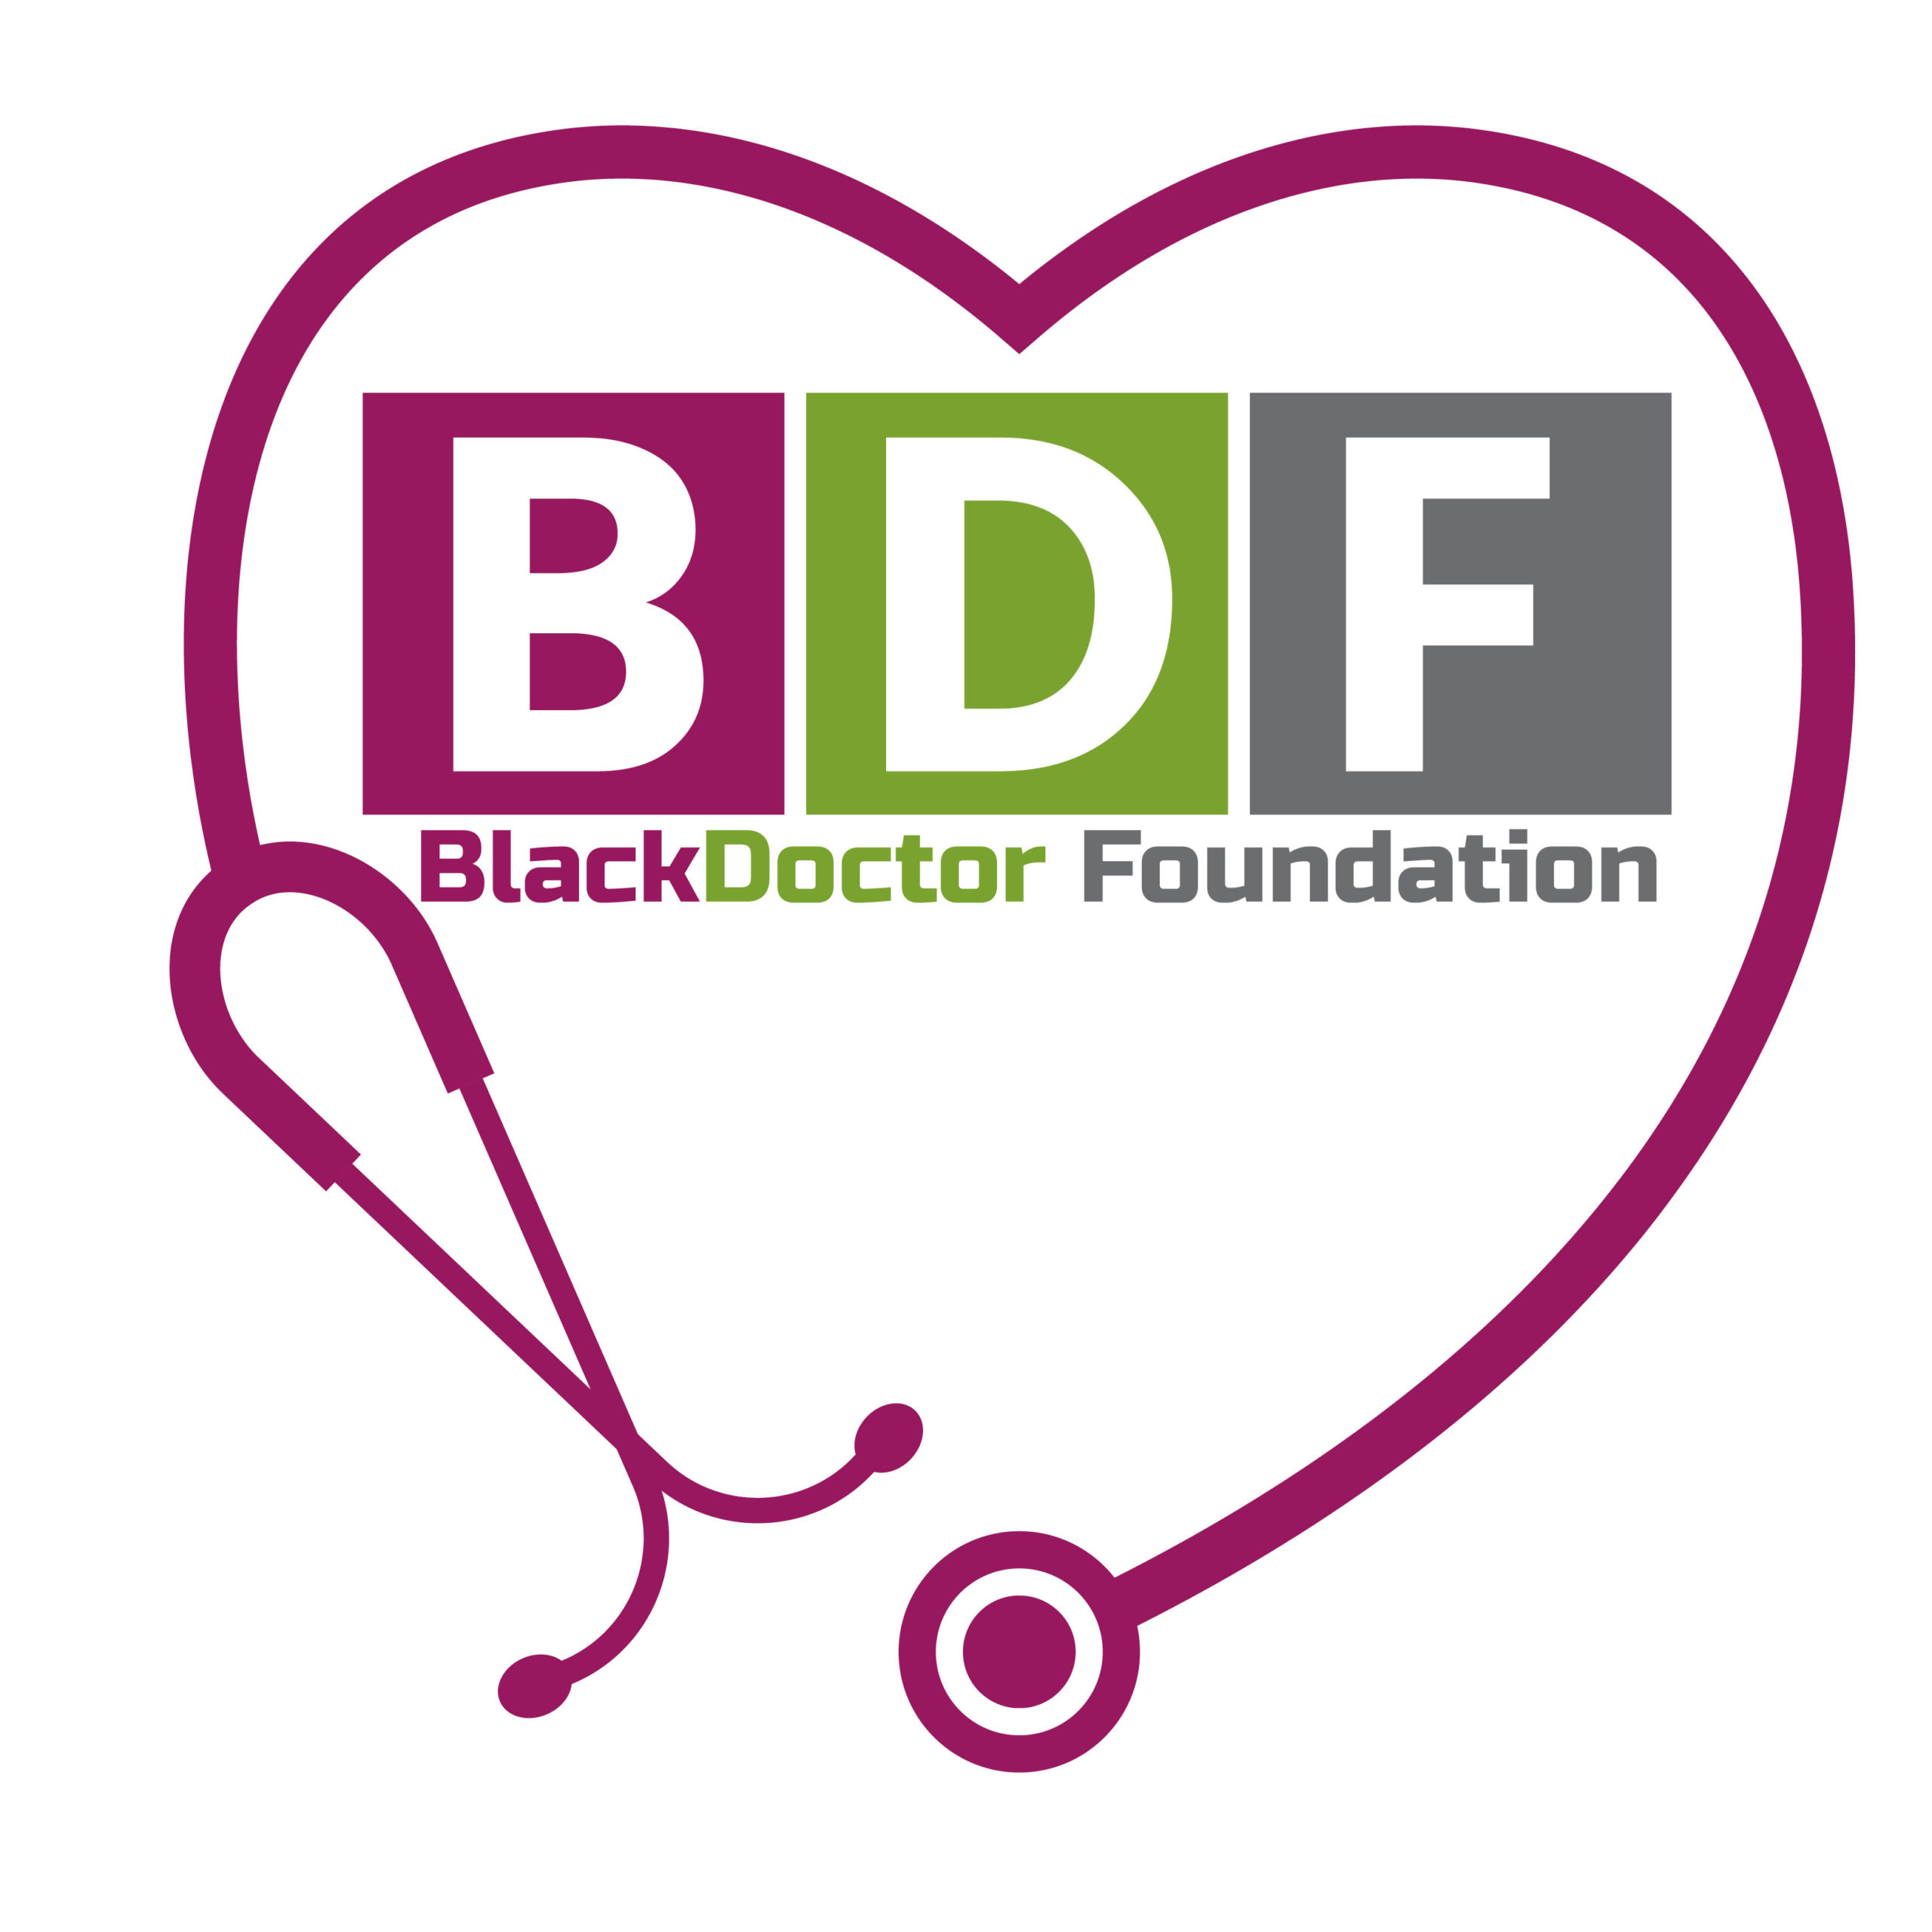 blackdoctor foundation logo